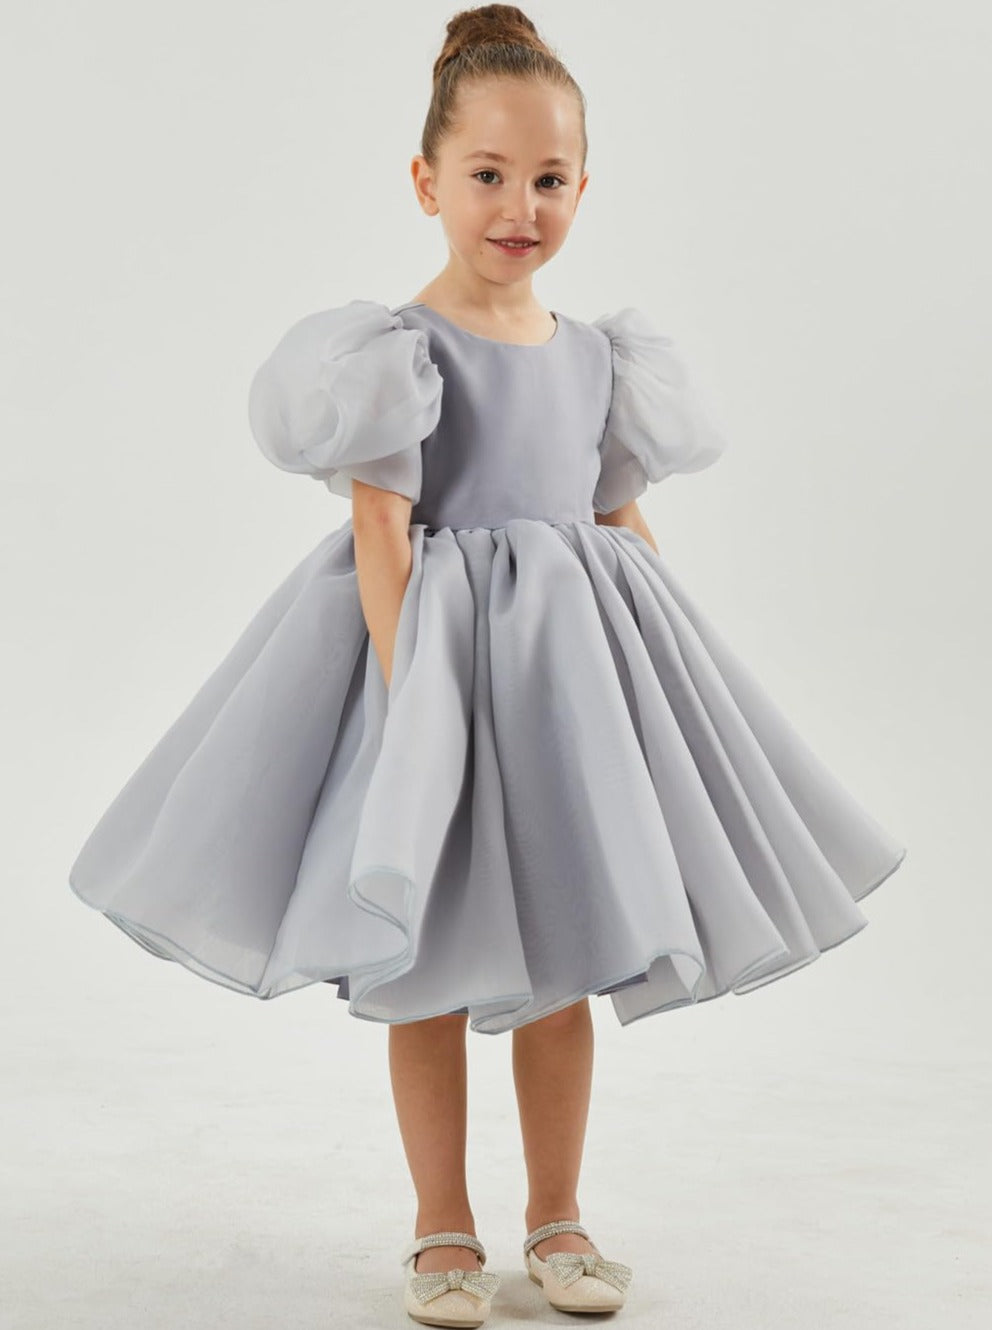 Organza Tulle Babydoll Girl Dress in Silver gray